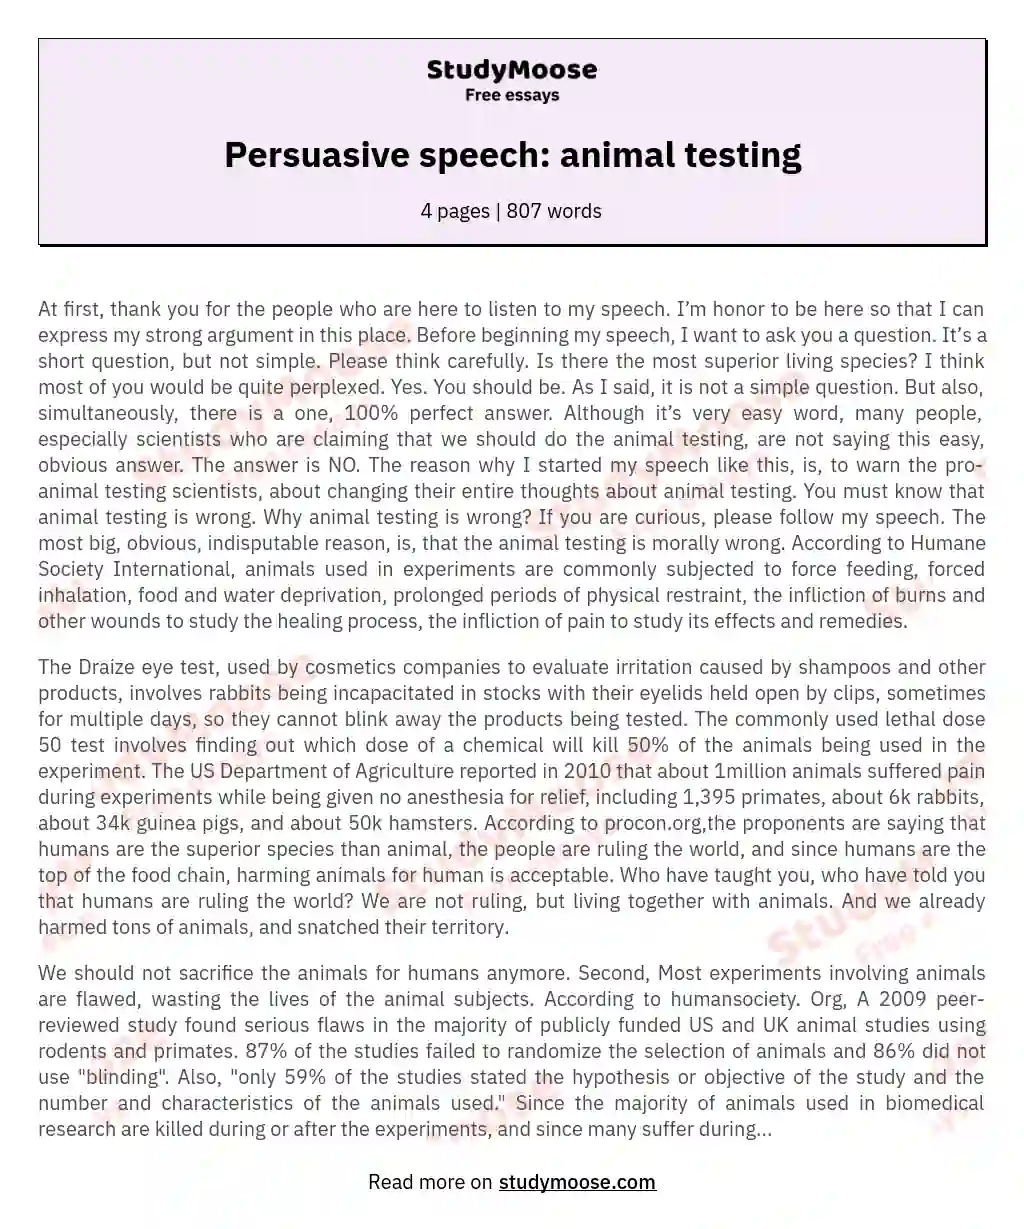 Persuasive speech: animal testing essay